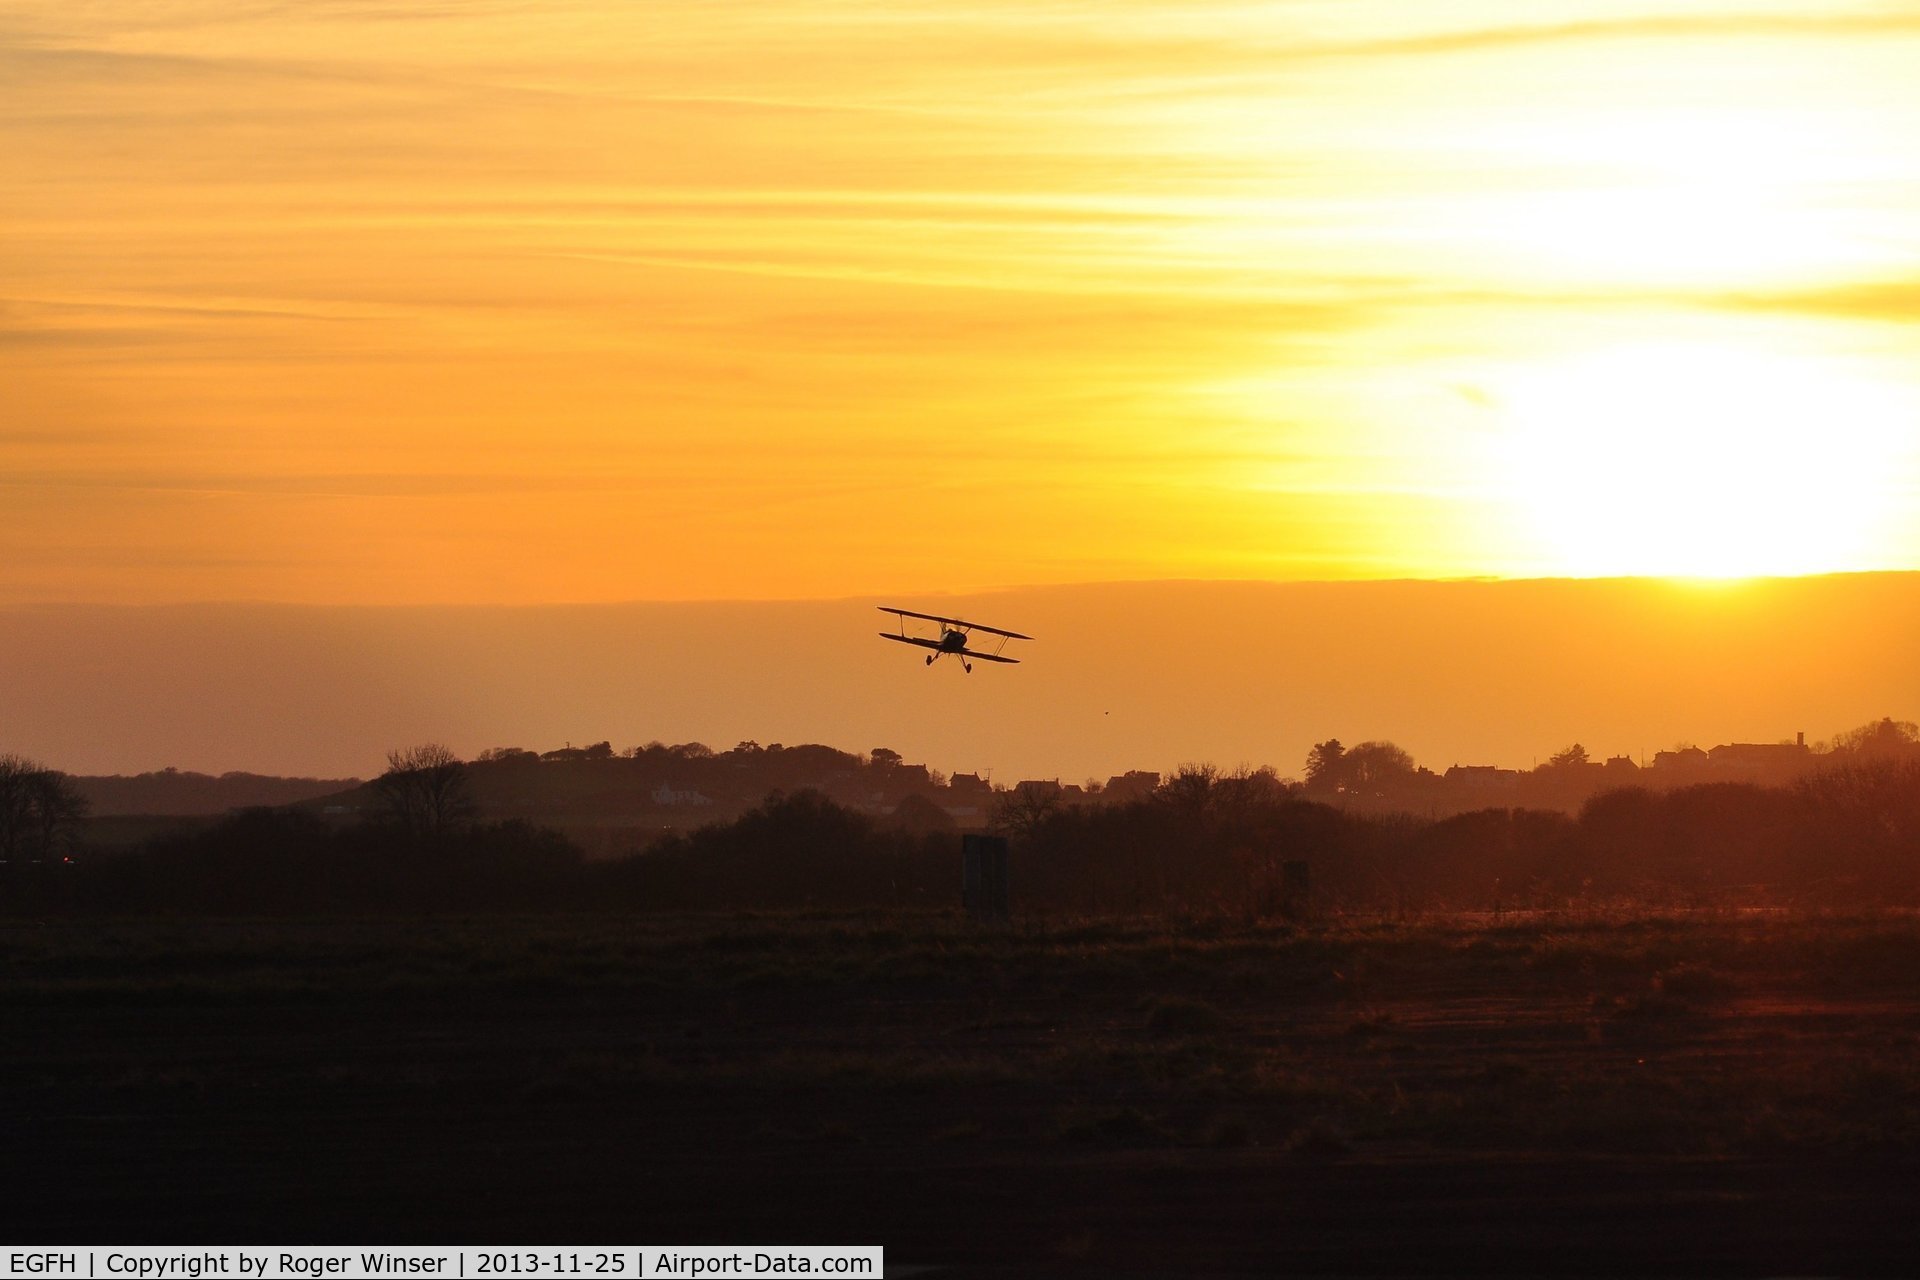 Swansea Airport, Swansea, Wales United Kingdom (EGFH) - Biplane arriving at sunset.